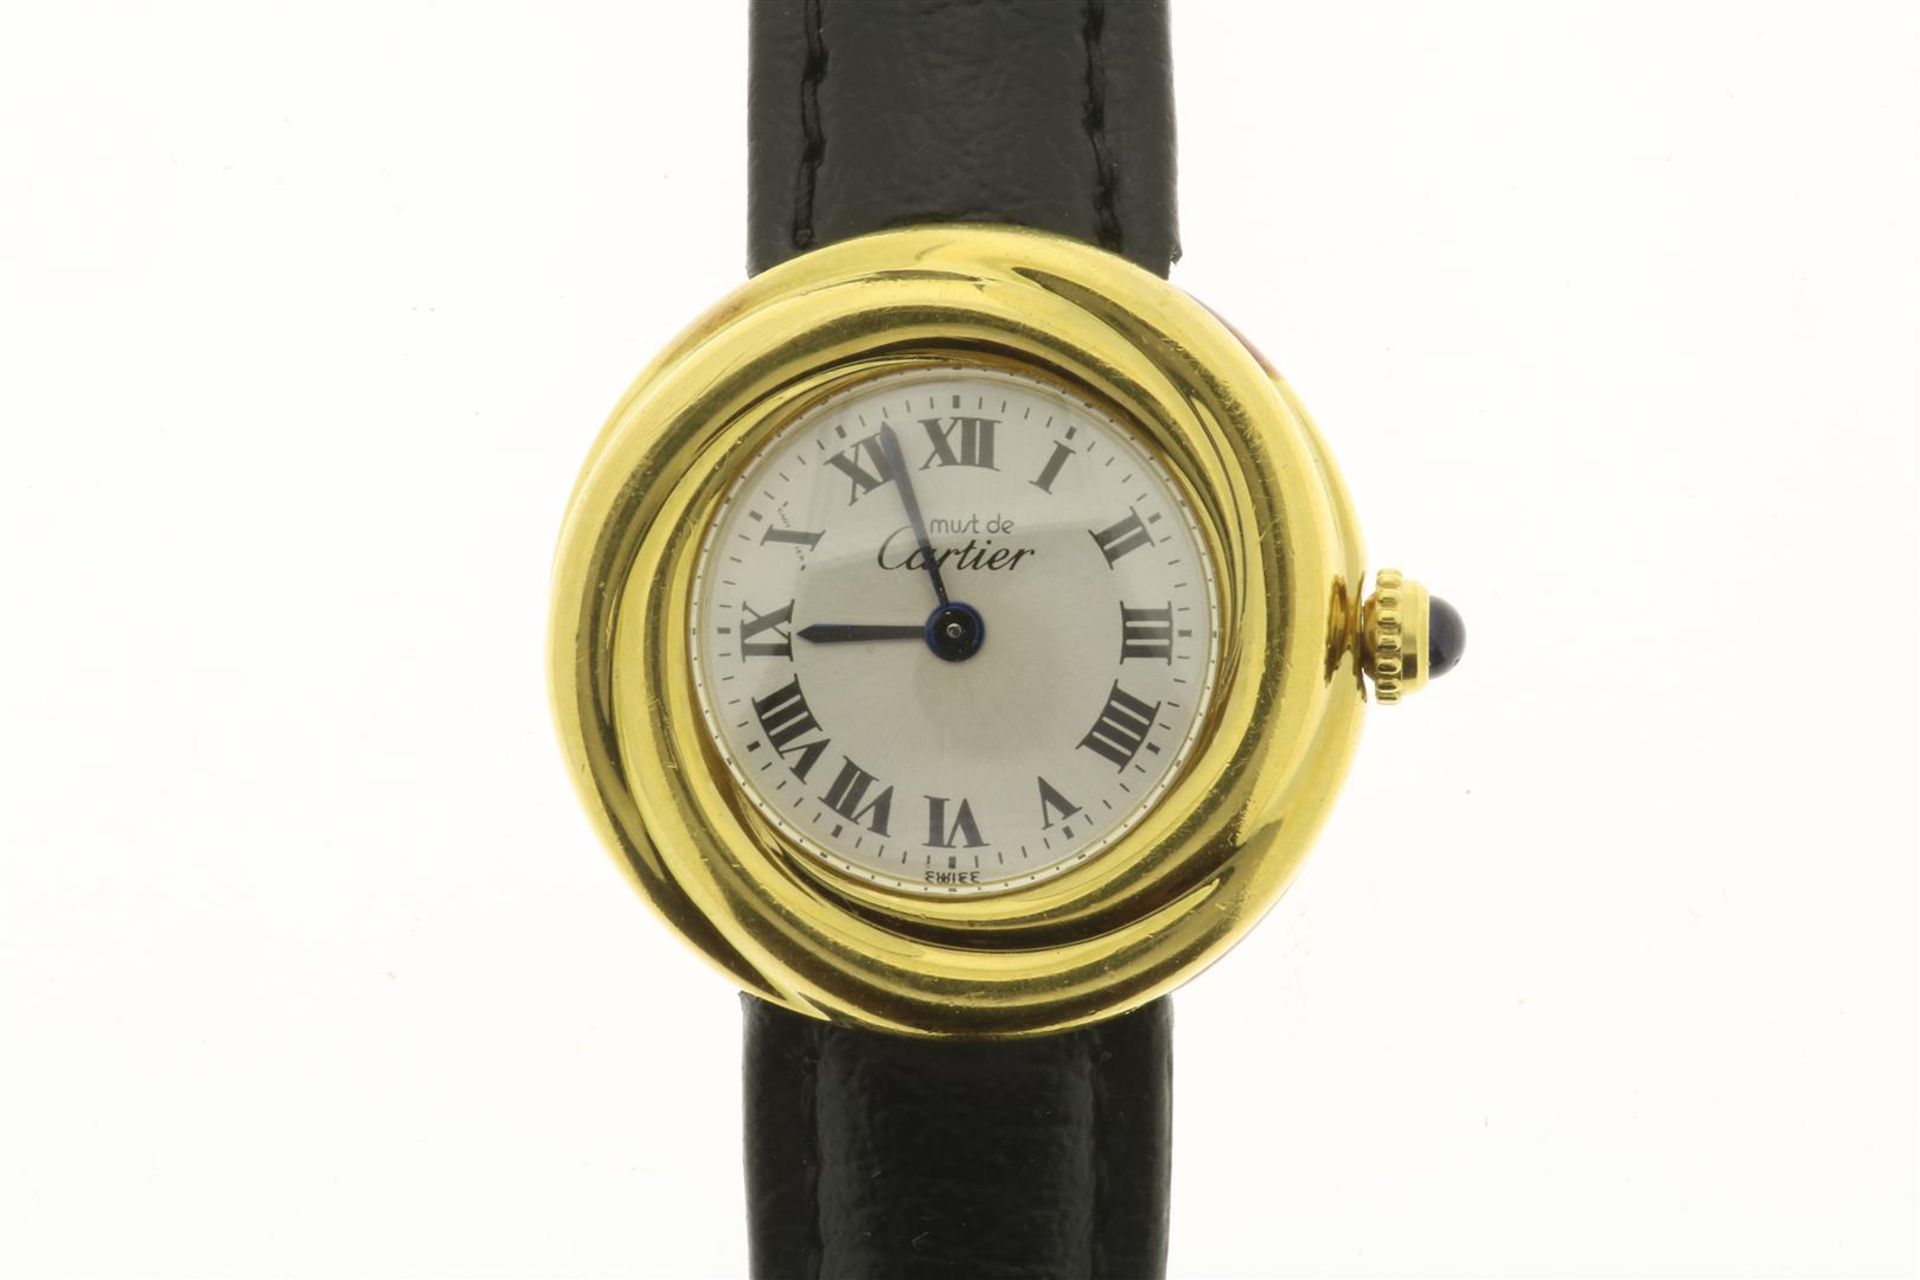 Le Must de Cartier watch 